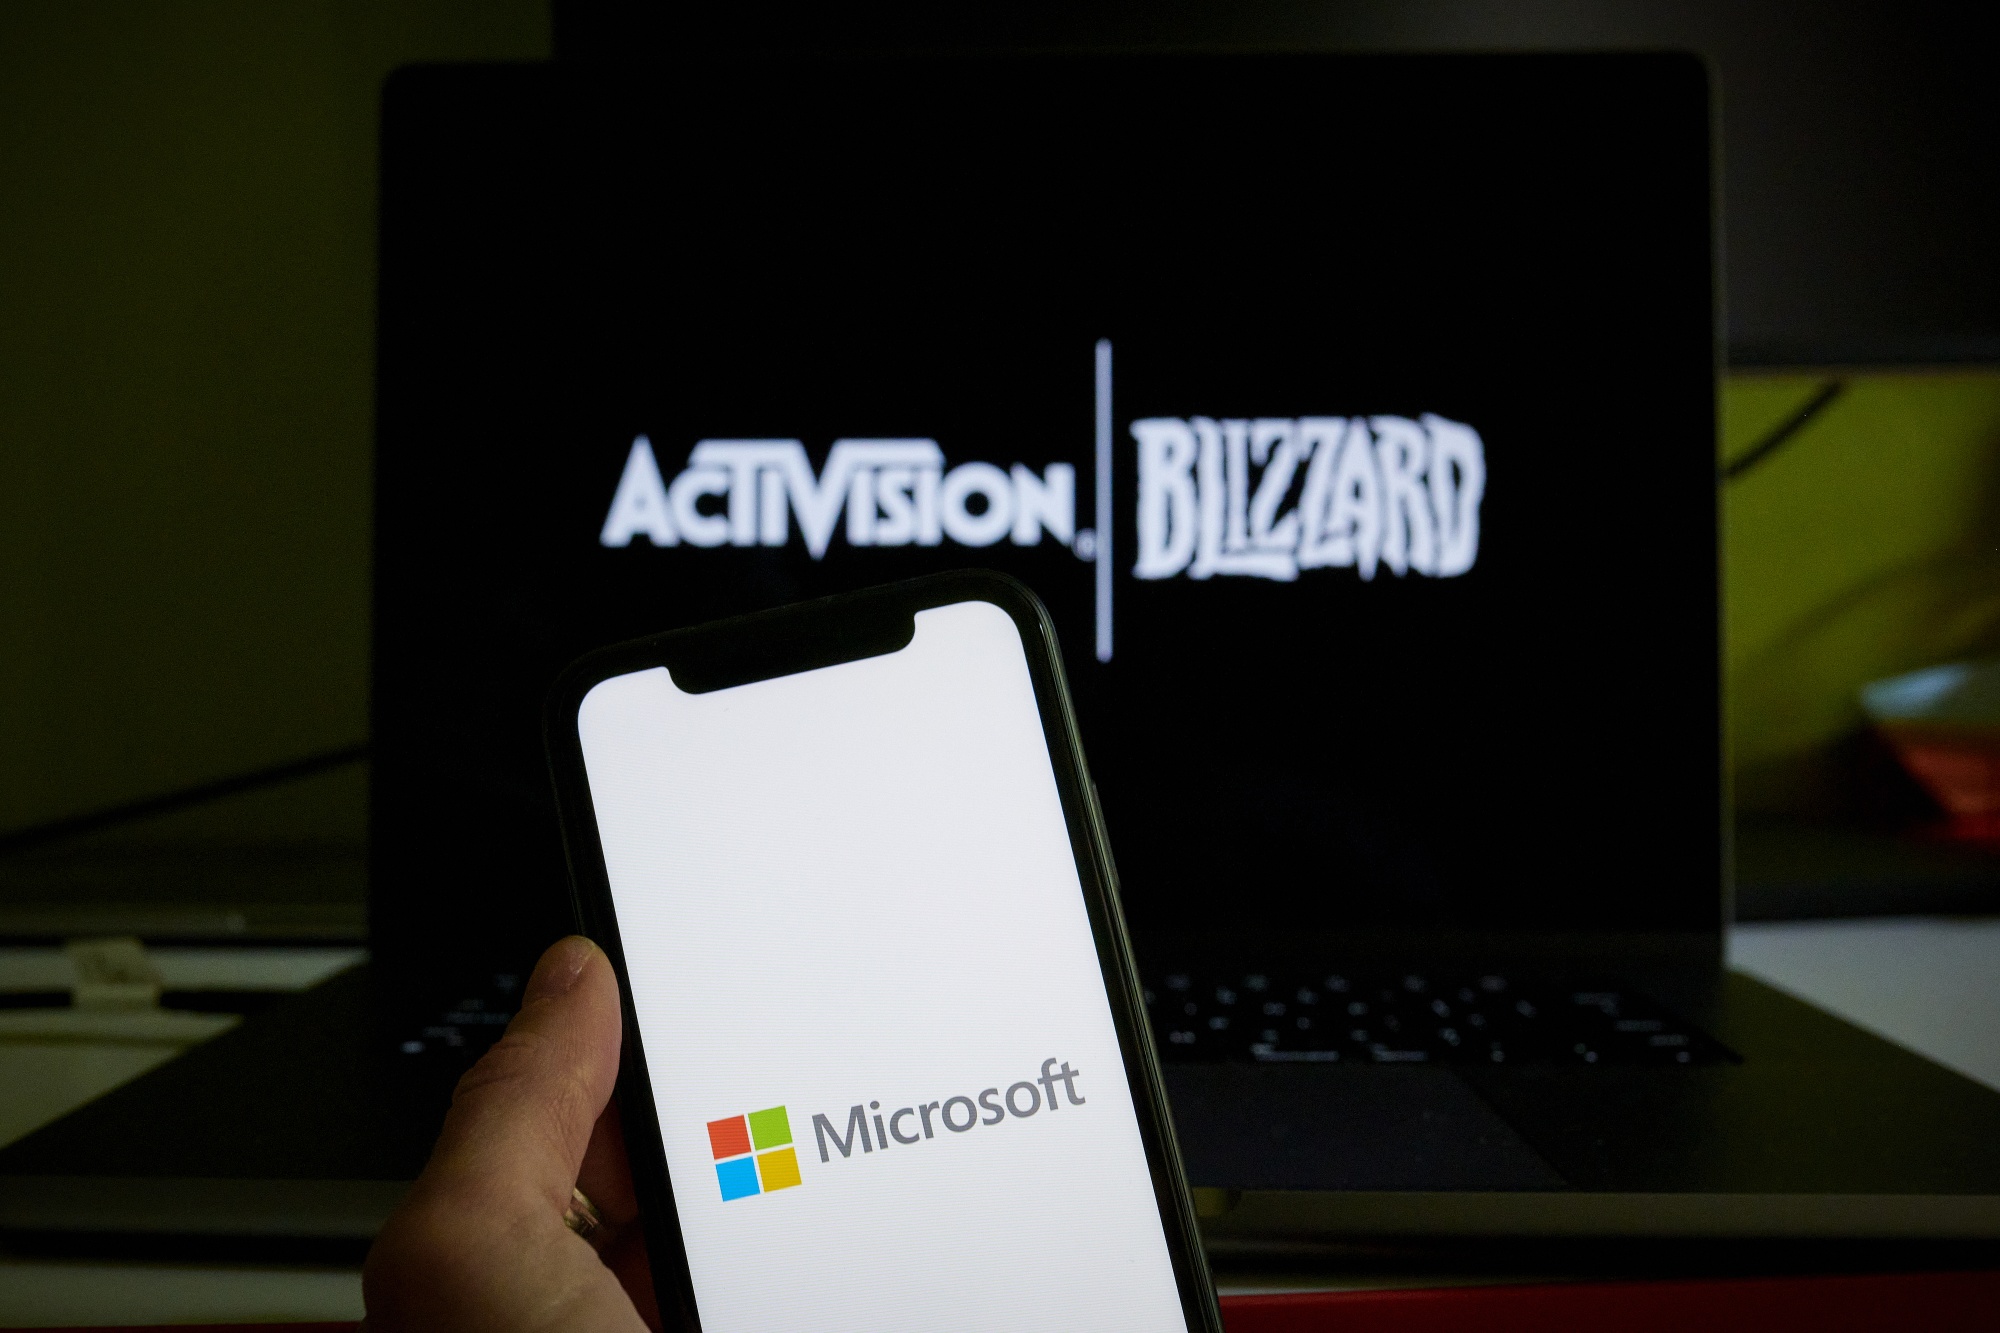 microsoft-activision blizzard: Microsoft-Activision Blizzard: Ubisoft  reveals strategy - The Economic Times